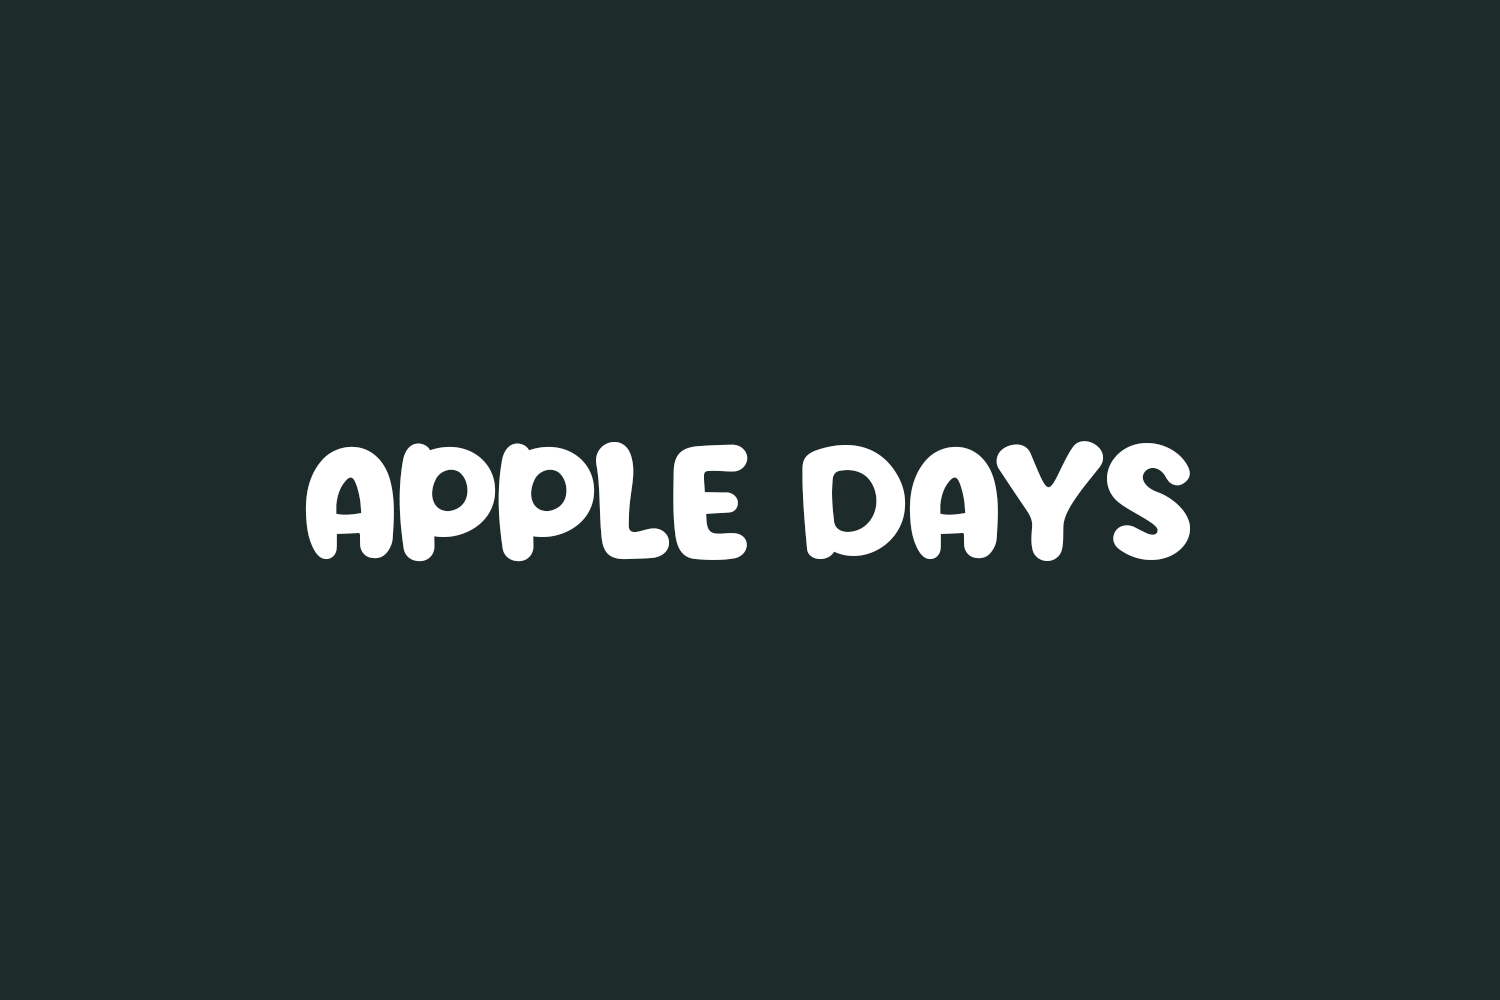 Apple Days Free Font